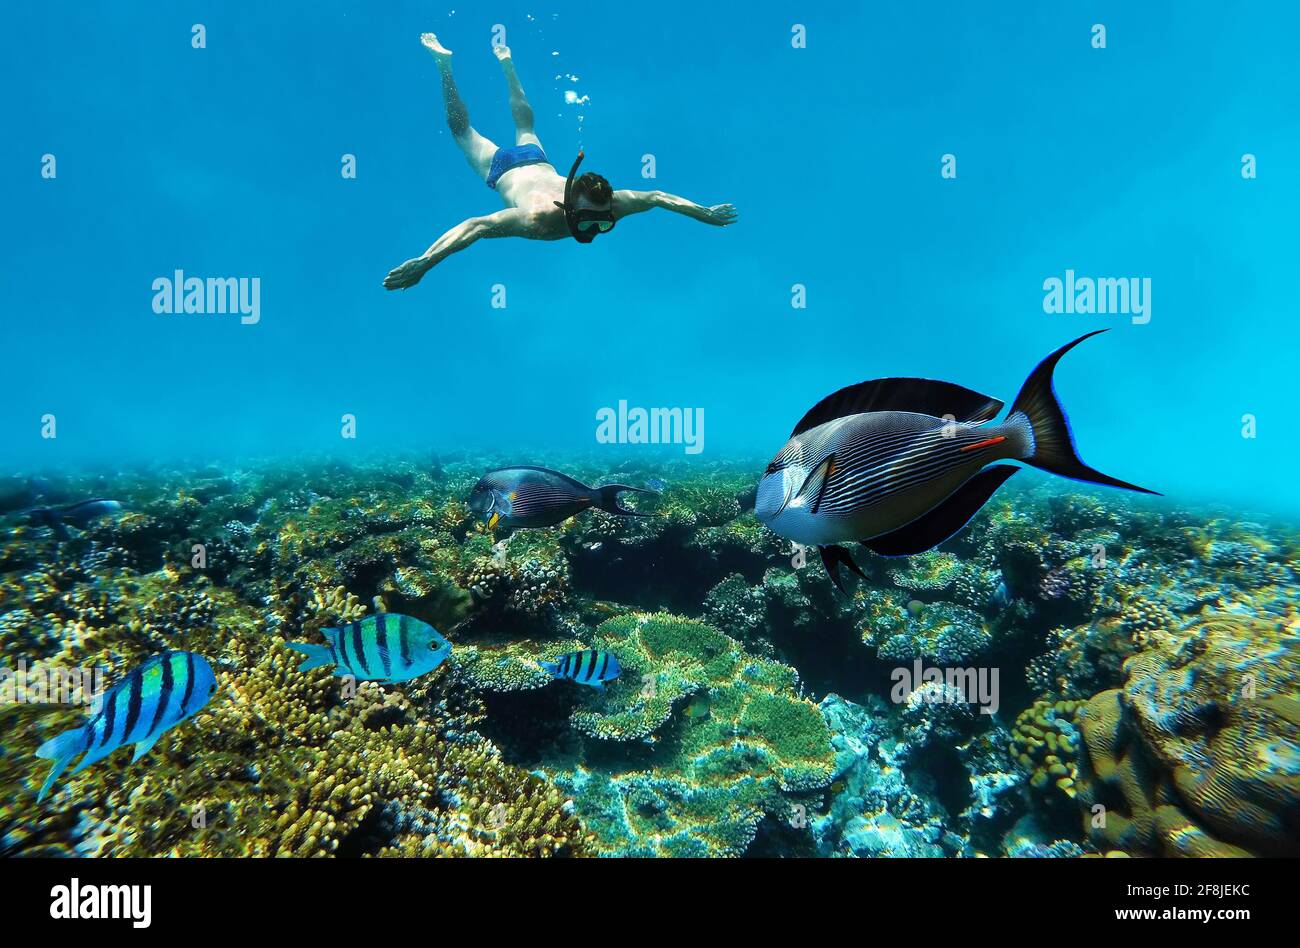 Snorkeling underwater in coral reef Stock Photo